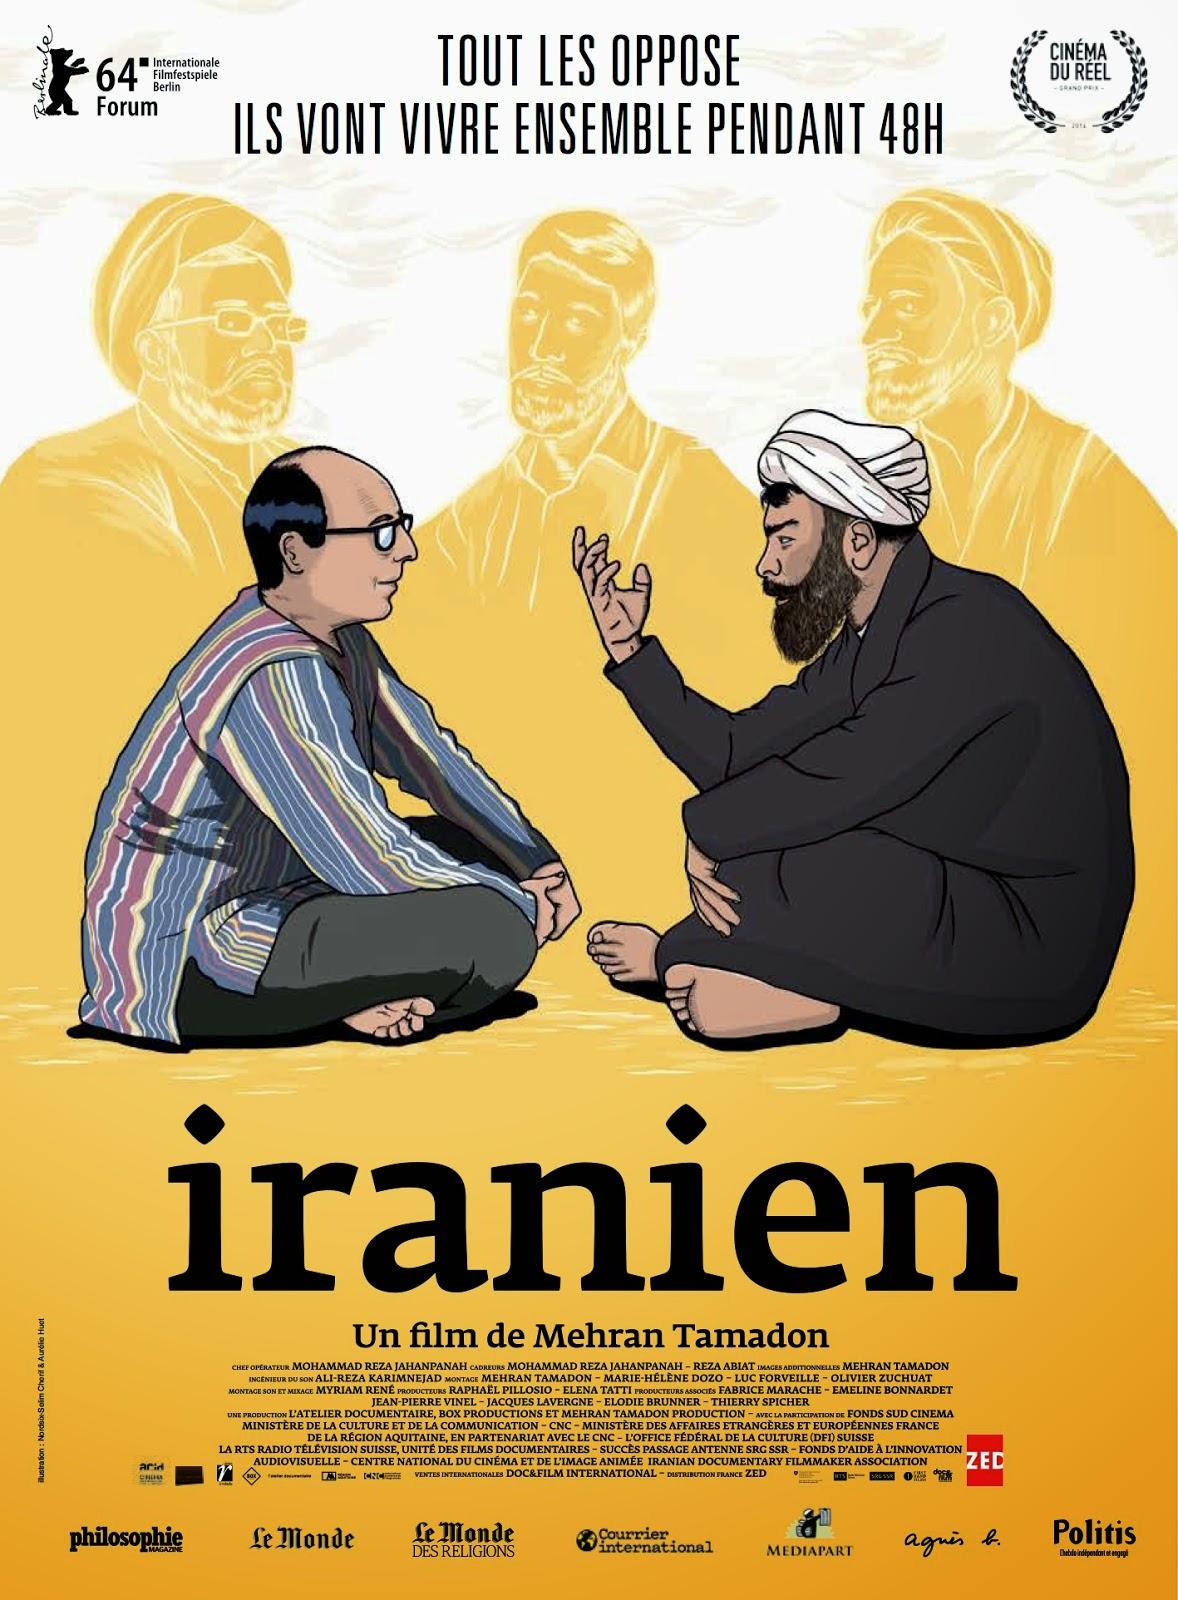 CINEMA: [ITW] Mehran Tamadon, réalisateur de Iranien (2014) / Mehran Tamadon, director of Iranian (2014)